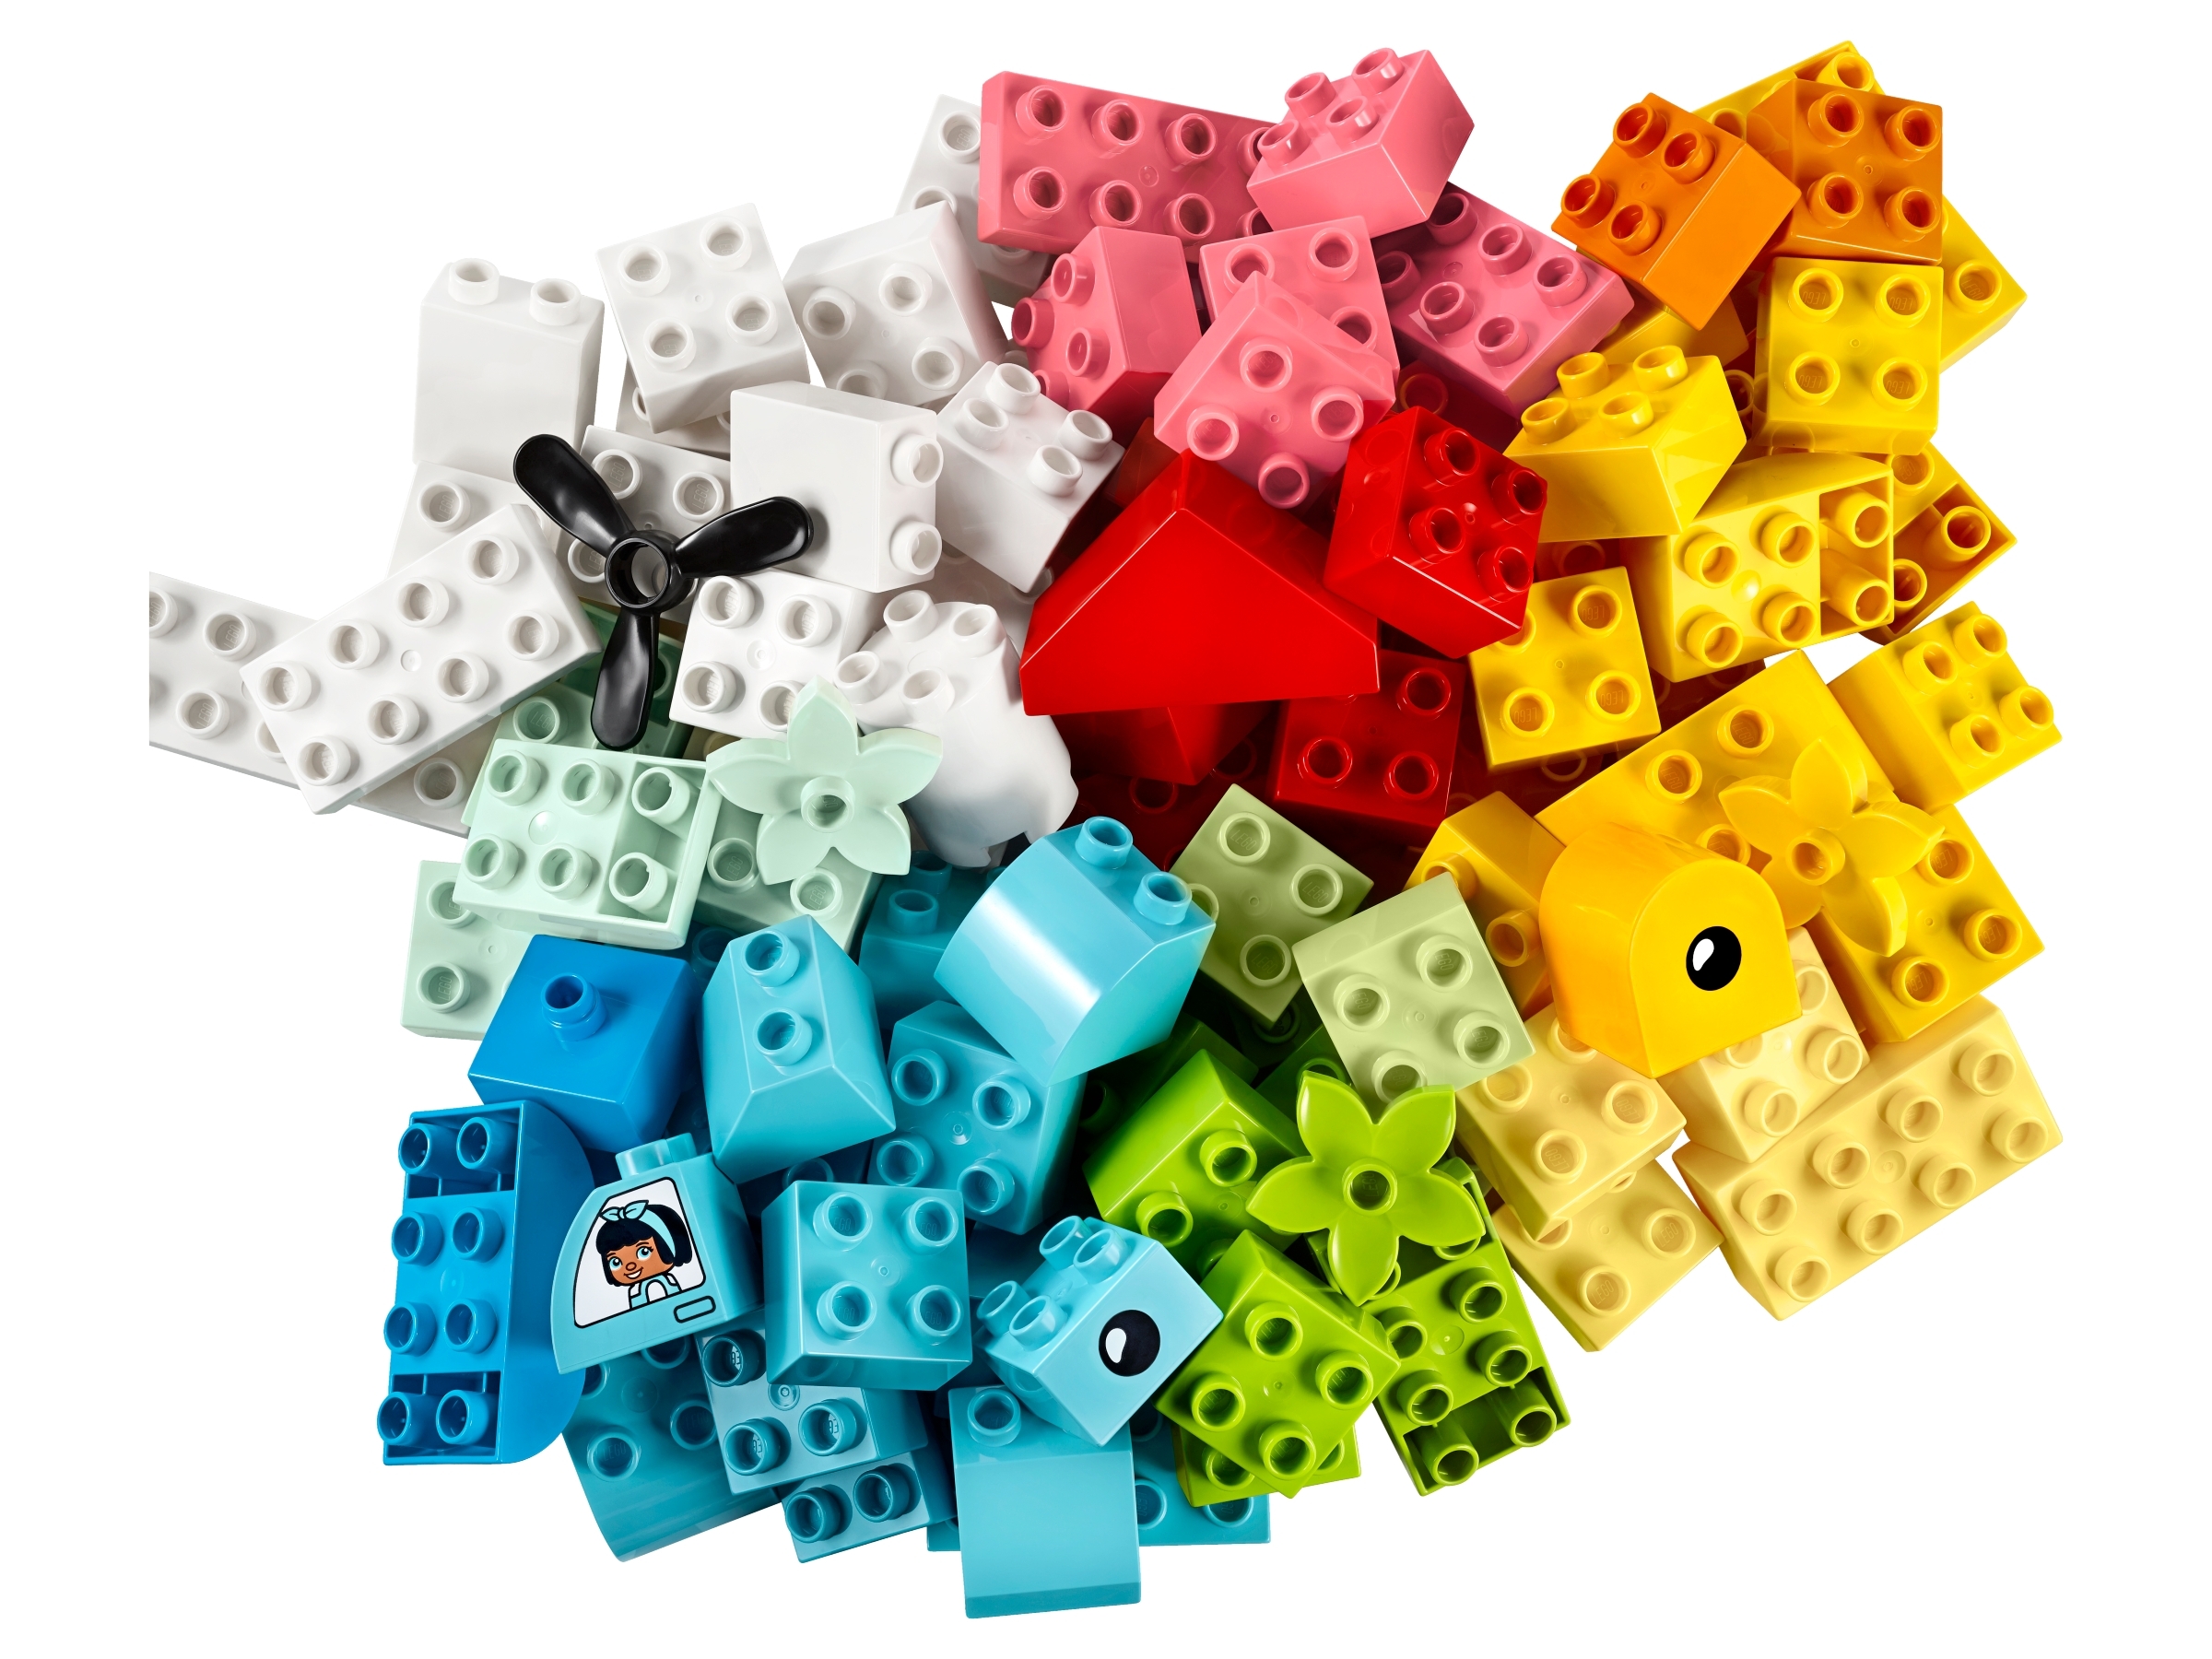 Конструктор LEGO DUPLO 10909 Шкатулка-сердечко